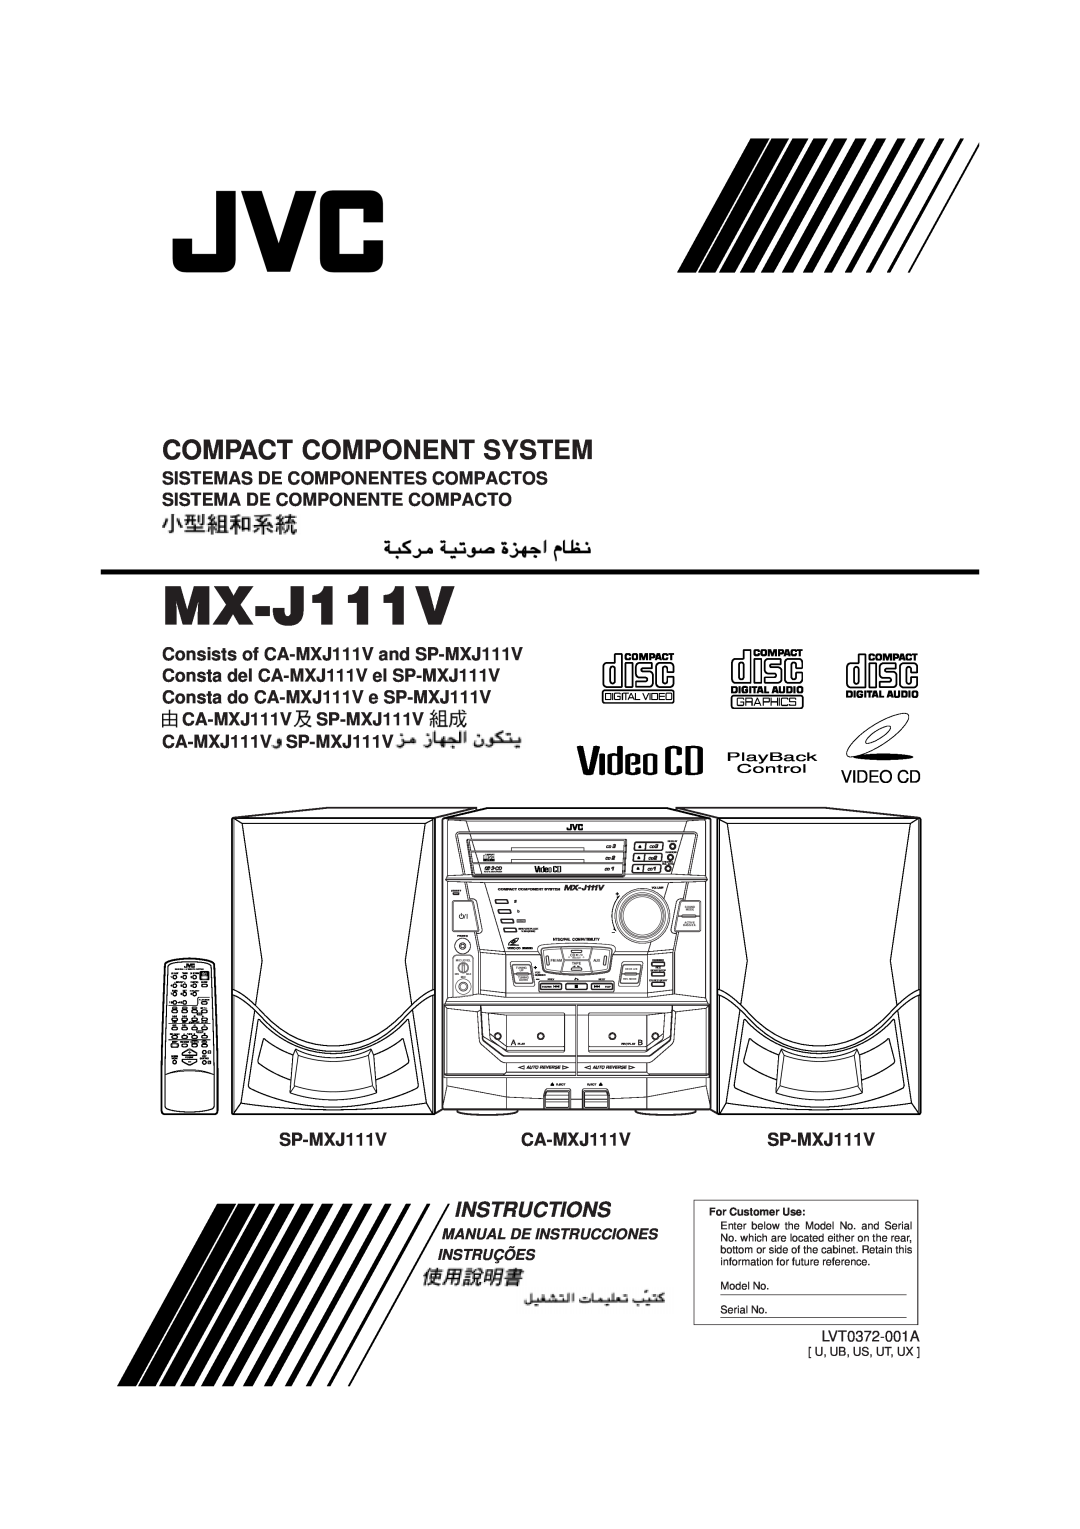 JVC MX-J111V manual Compact Component System, Sistemas De Componentes Compactos, Sistema De Componente Compacto, Video Cd 